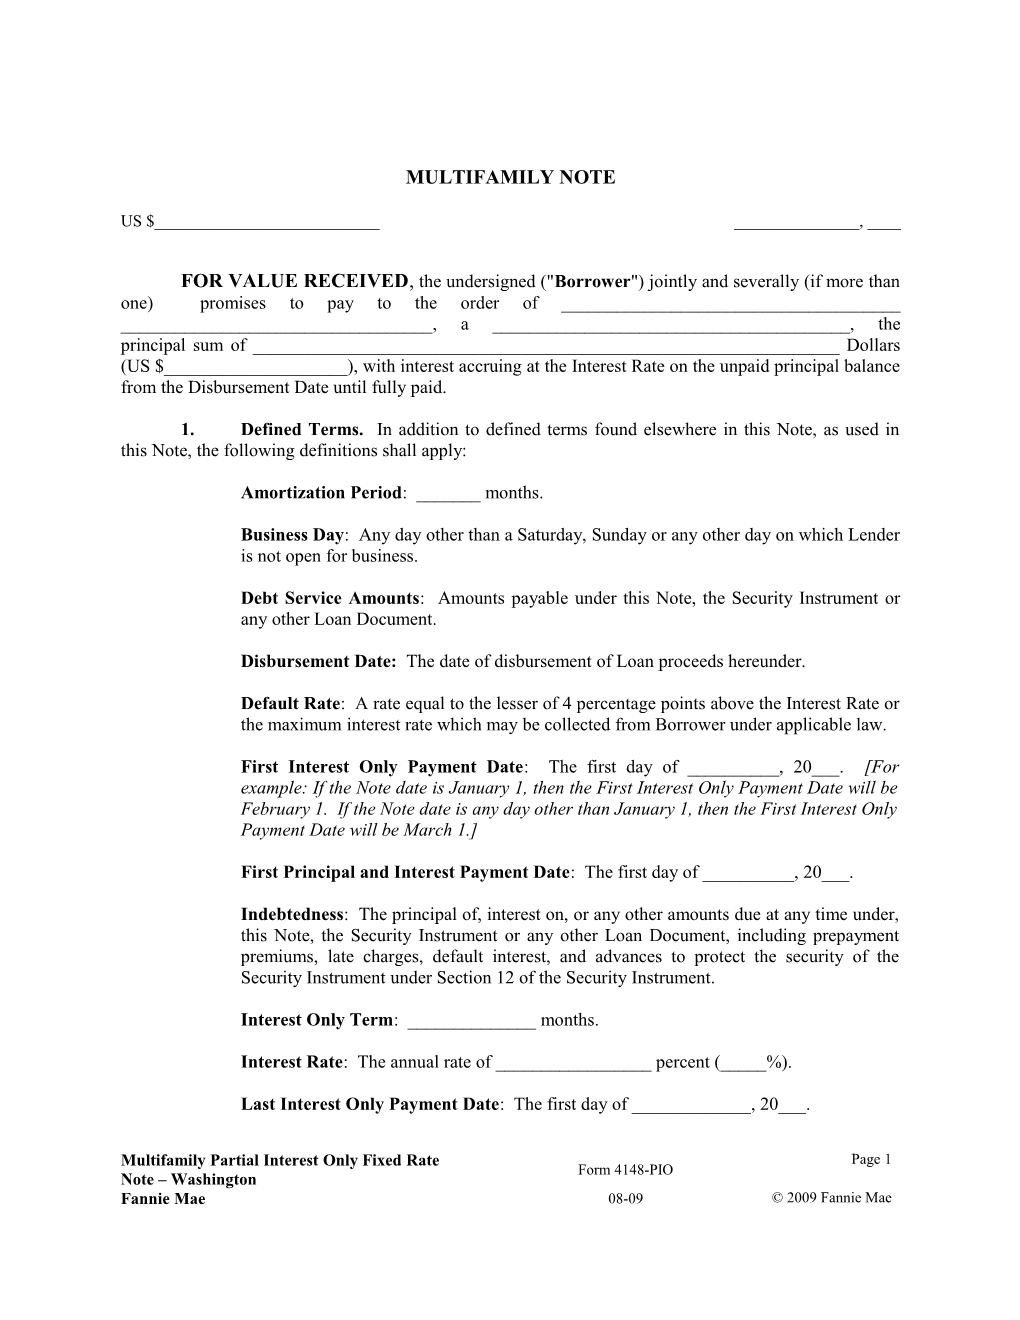 Multifamily Form 4148-PIO Washington